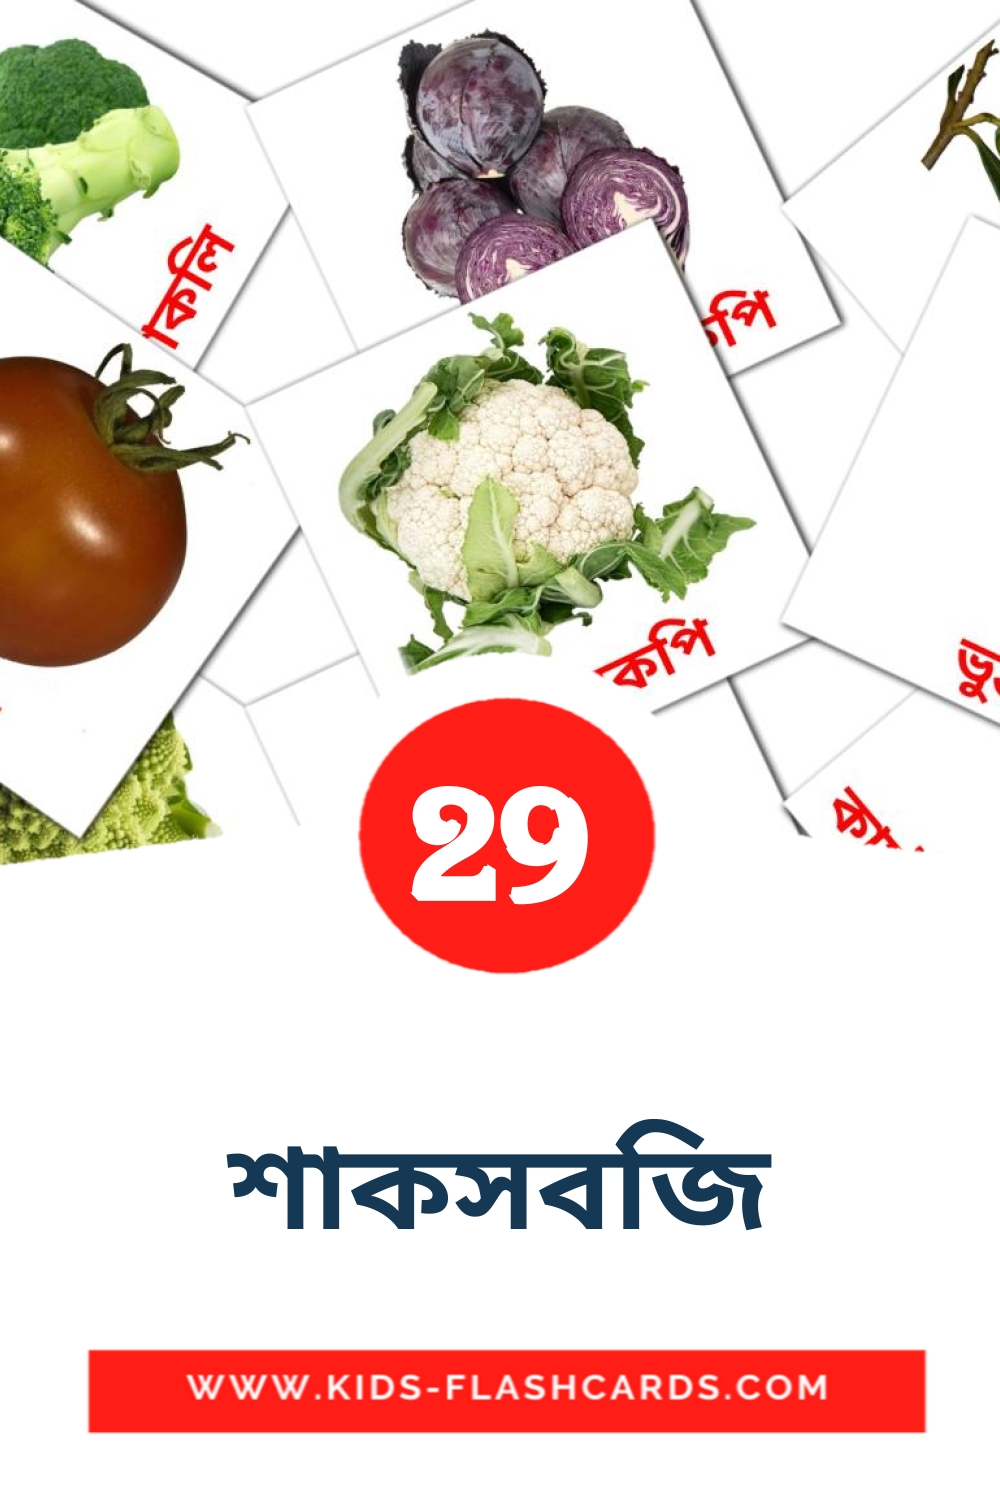 29 tarjetas didacticas de শাকসবজি para el jardín de infancia en bengalí